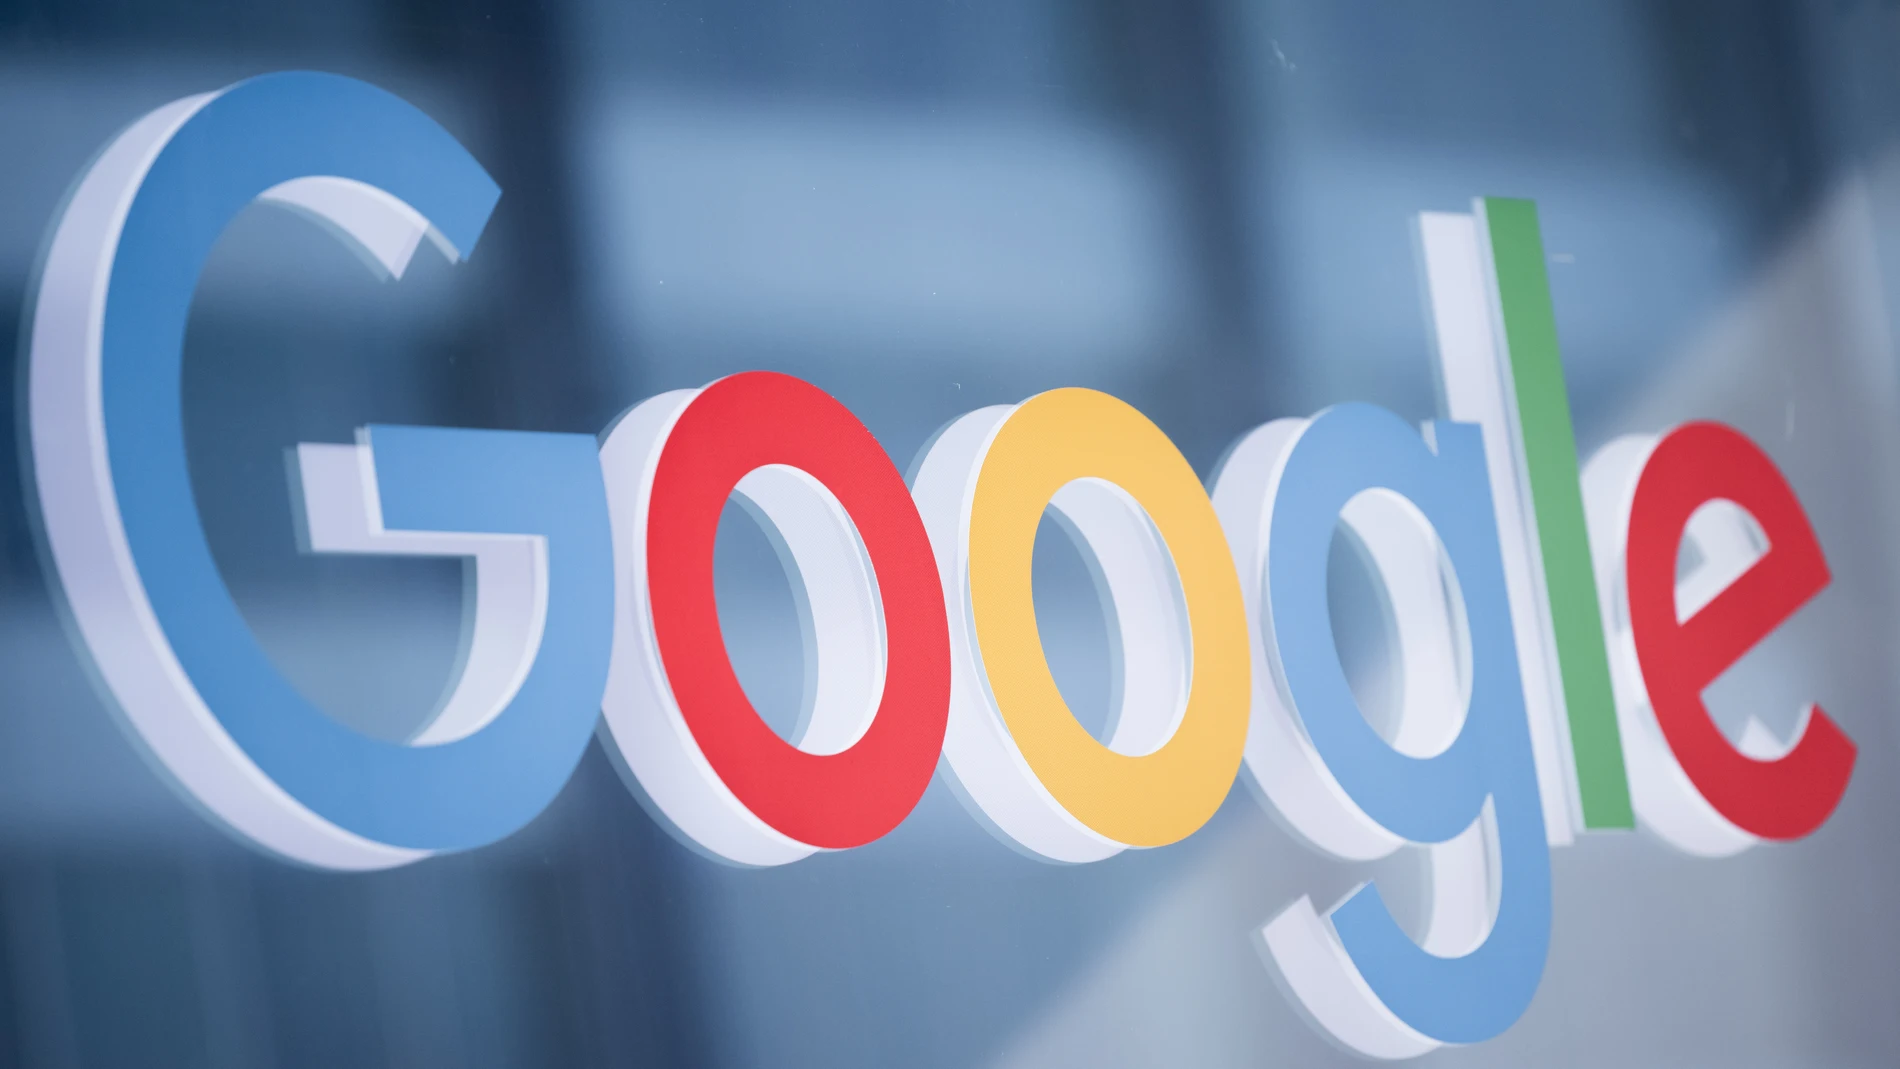 La CNMC abre expediente sancionador contra Google por "posibles prácticas anticompetitivas" que afectarían a prensa